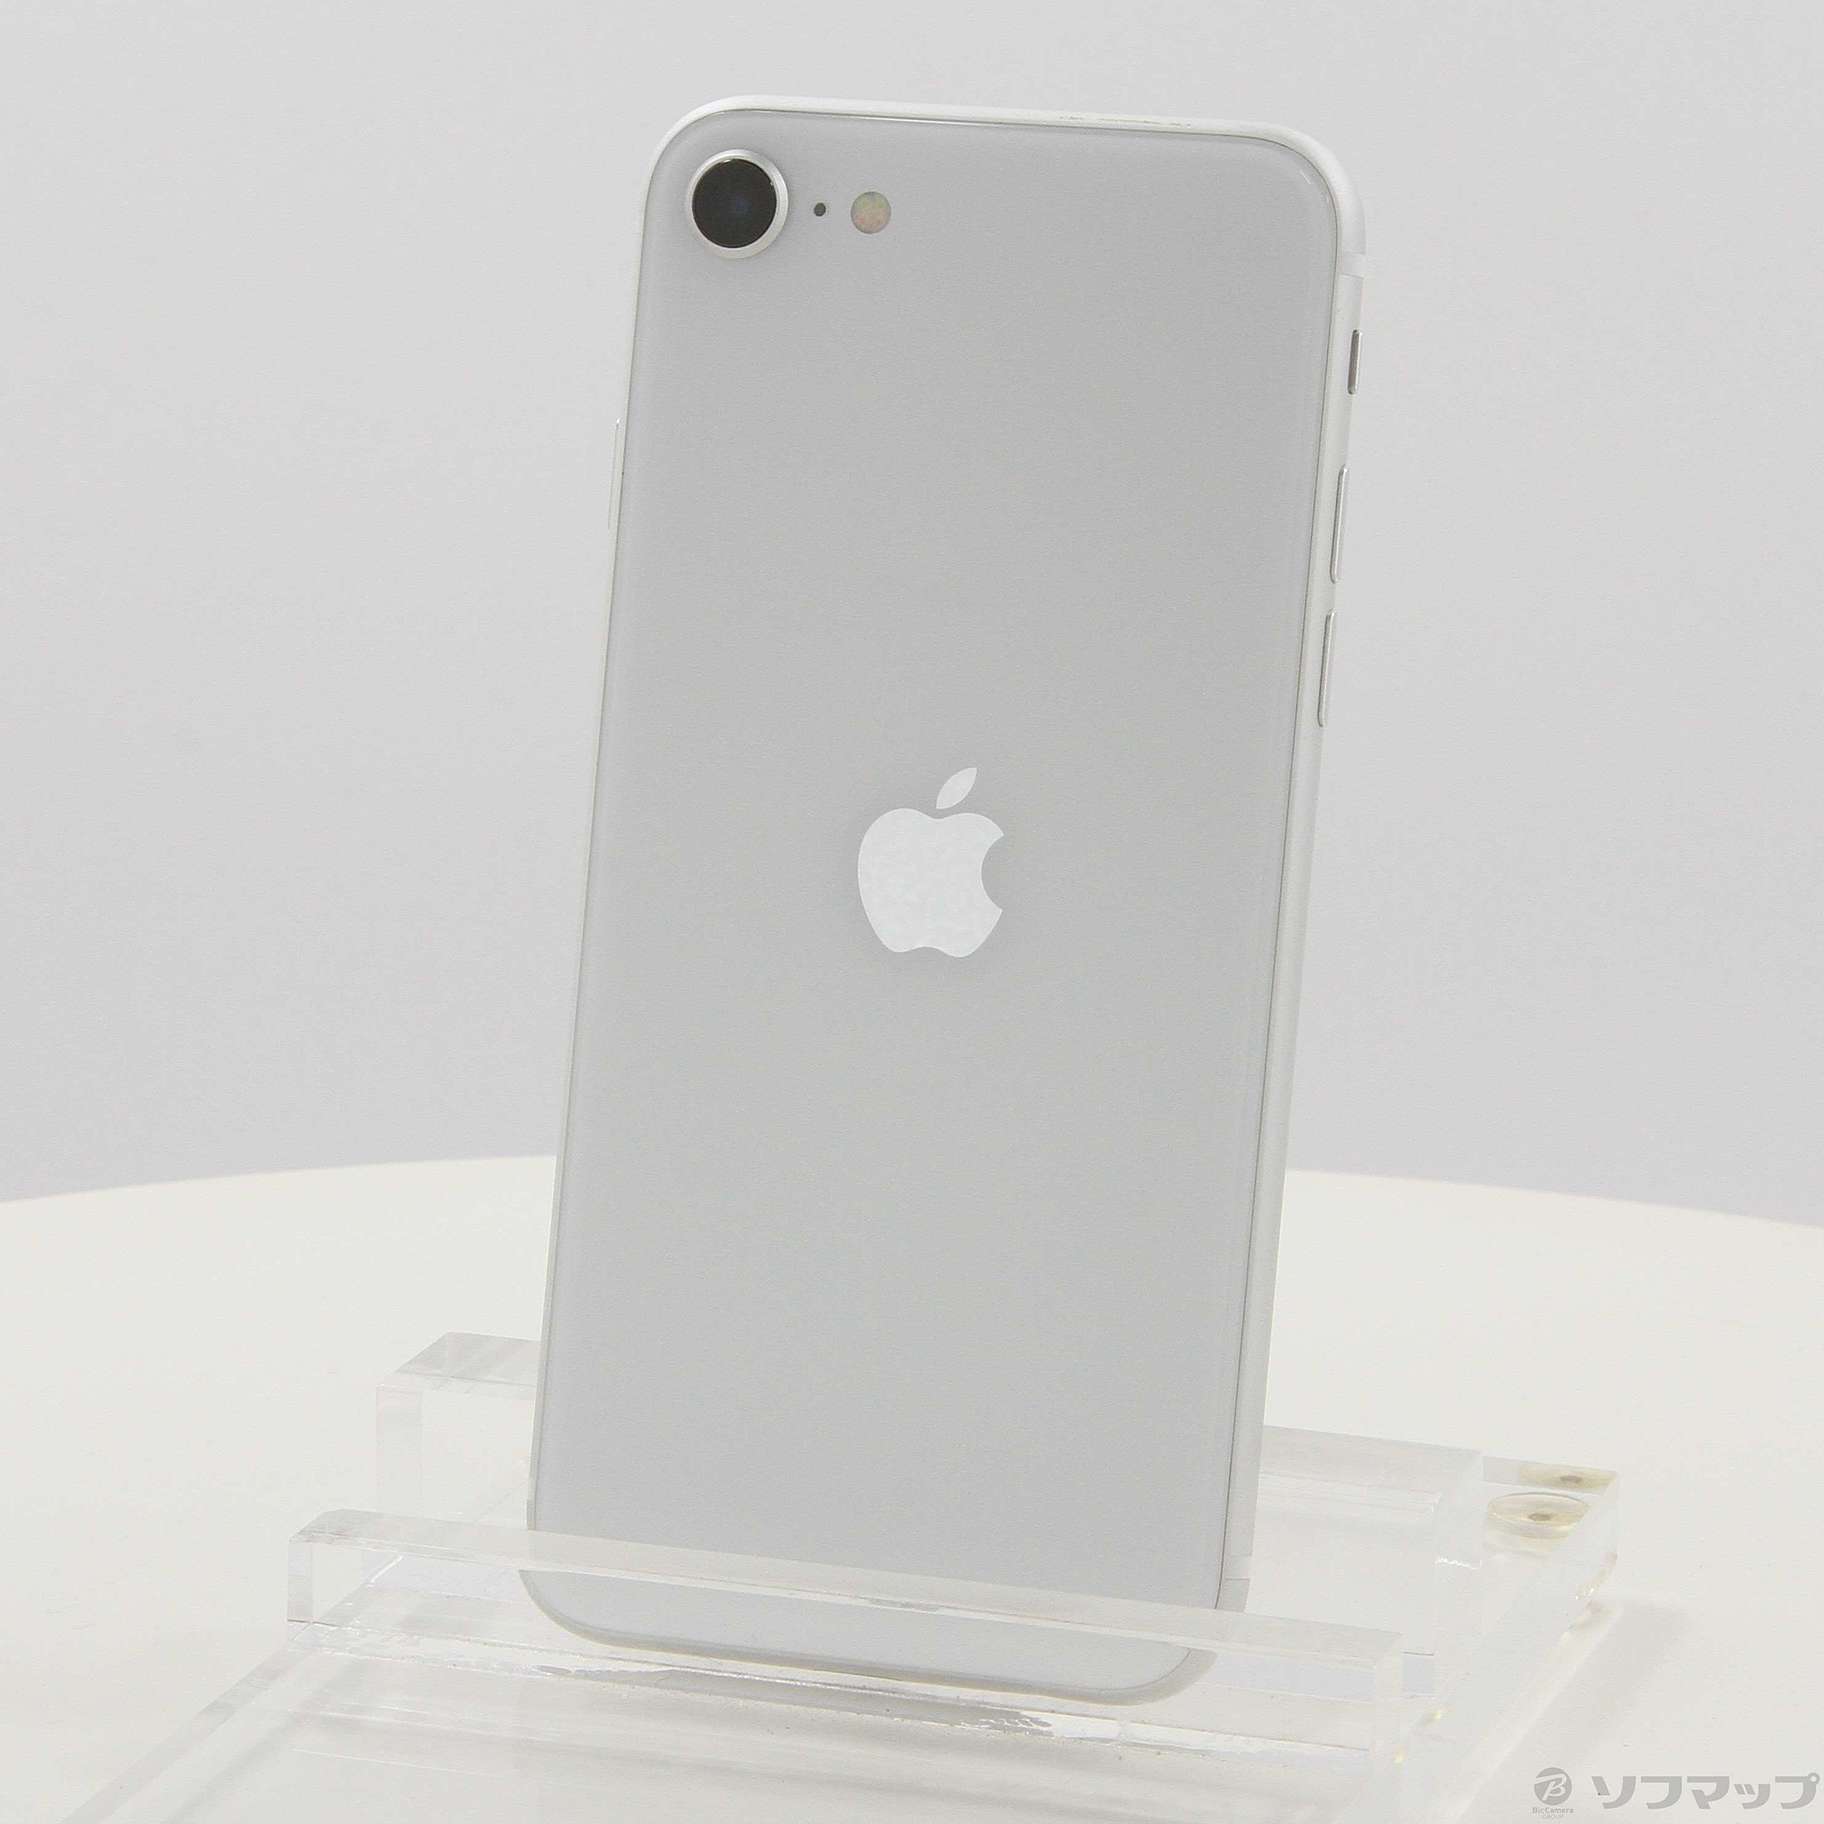 iPhone SE 第2世代 (SE2) ホワイト 128GB simフリー機種名iPhoneSE第2世代